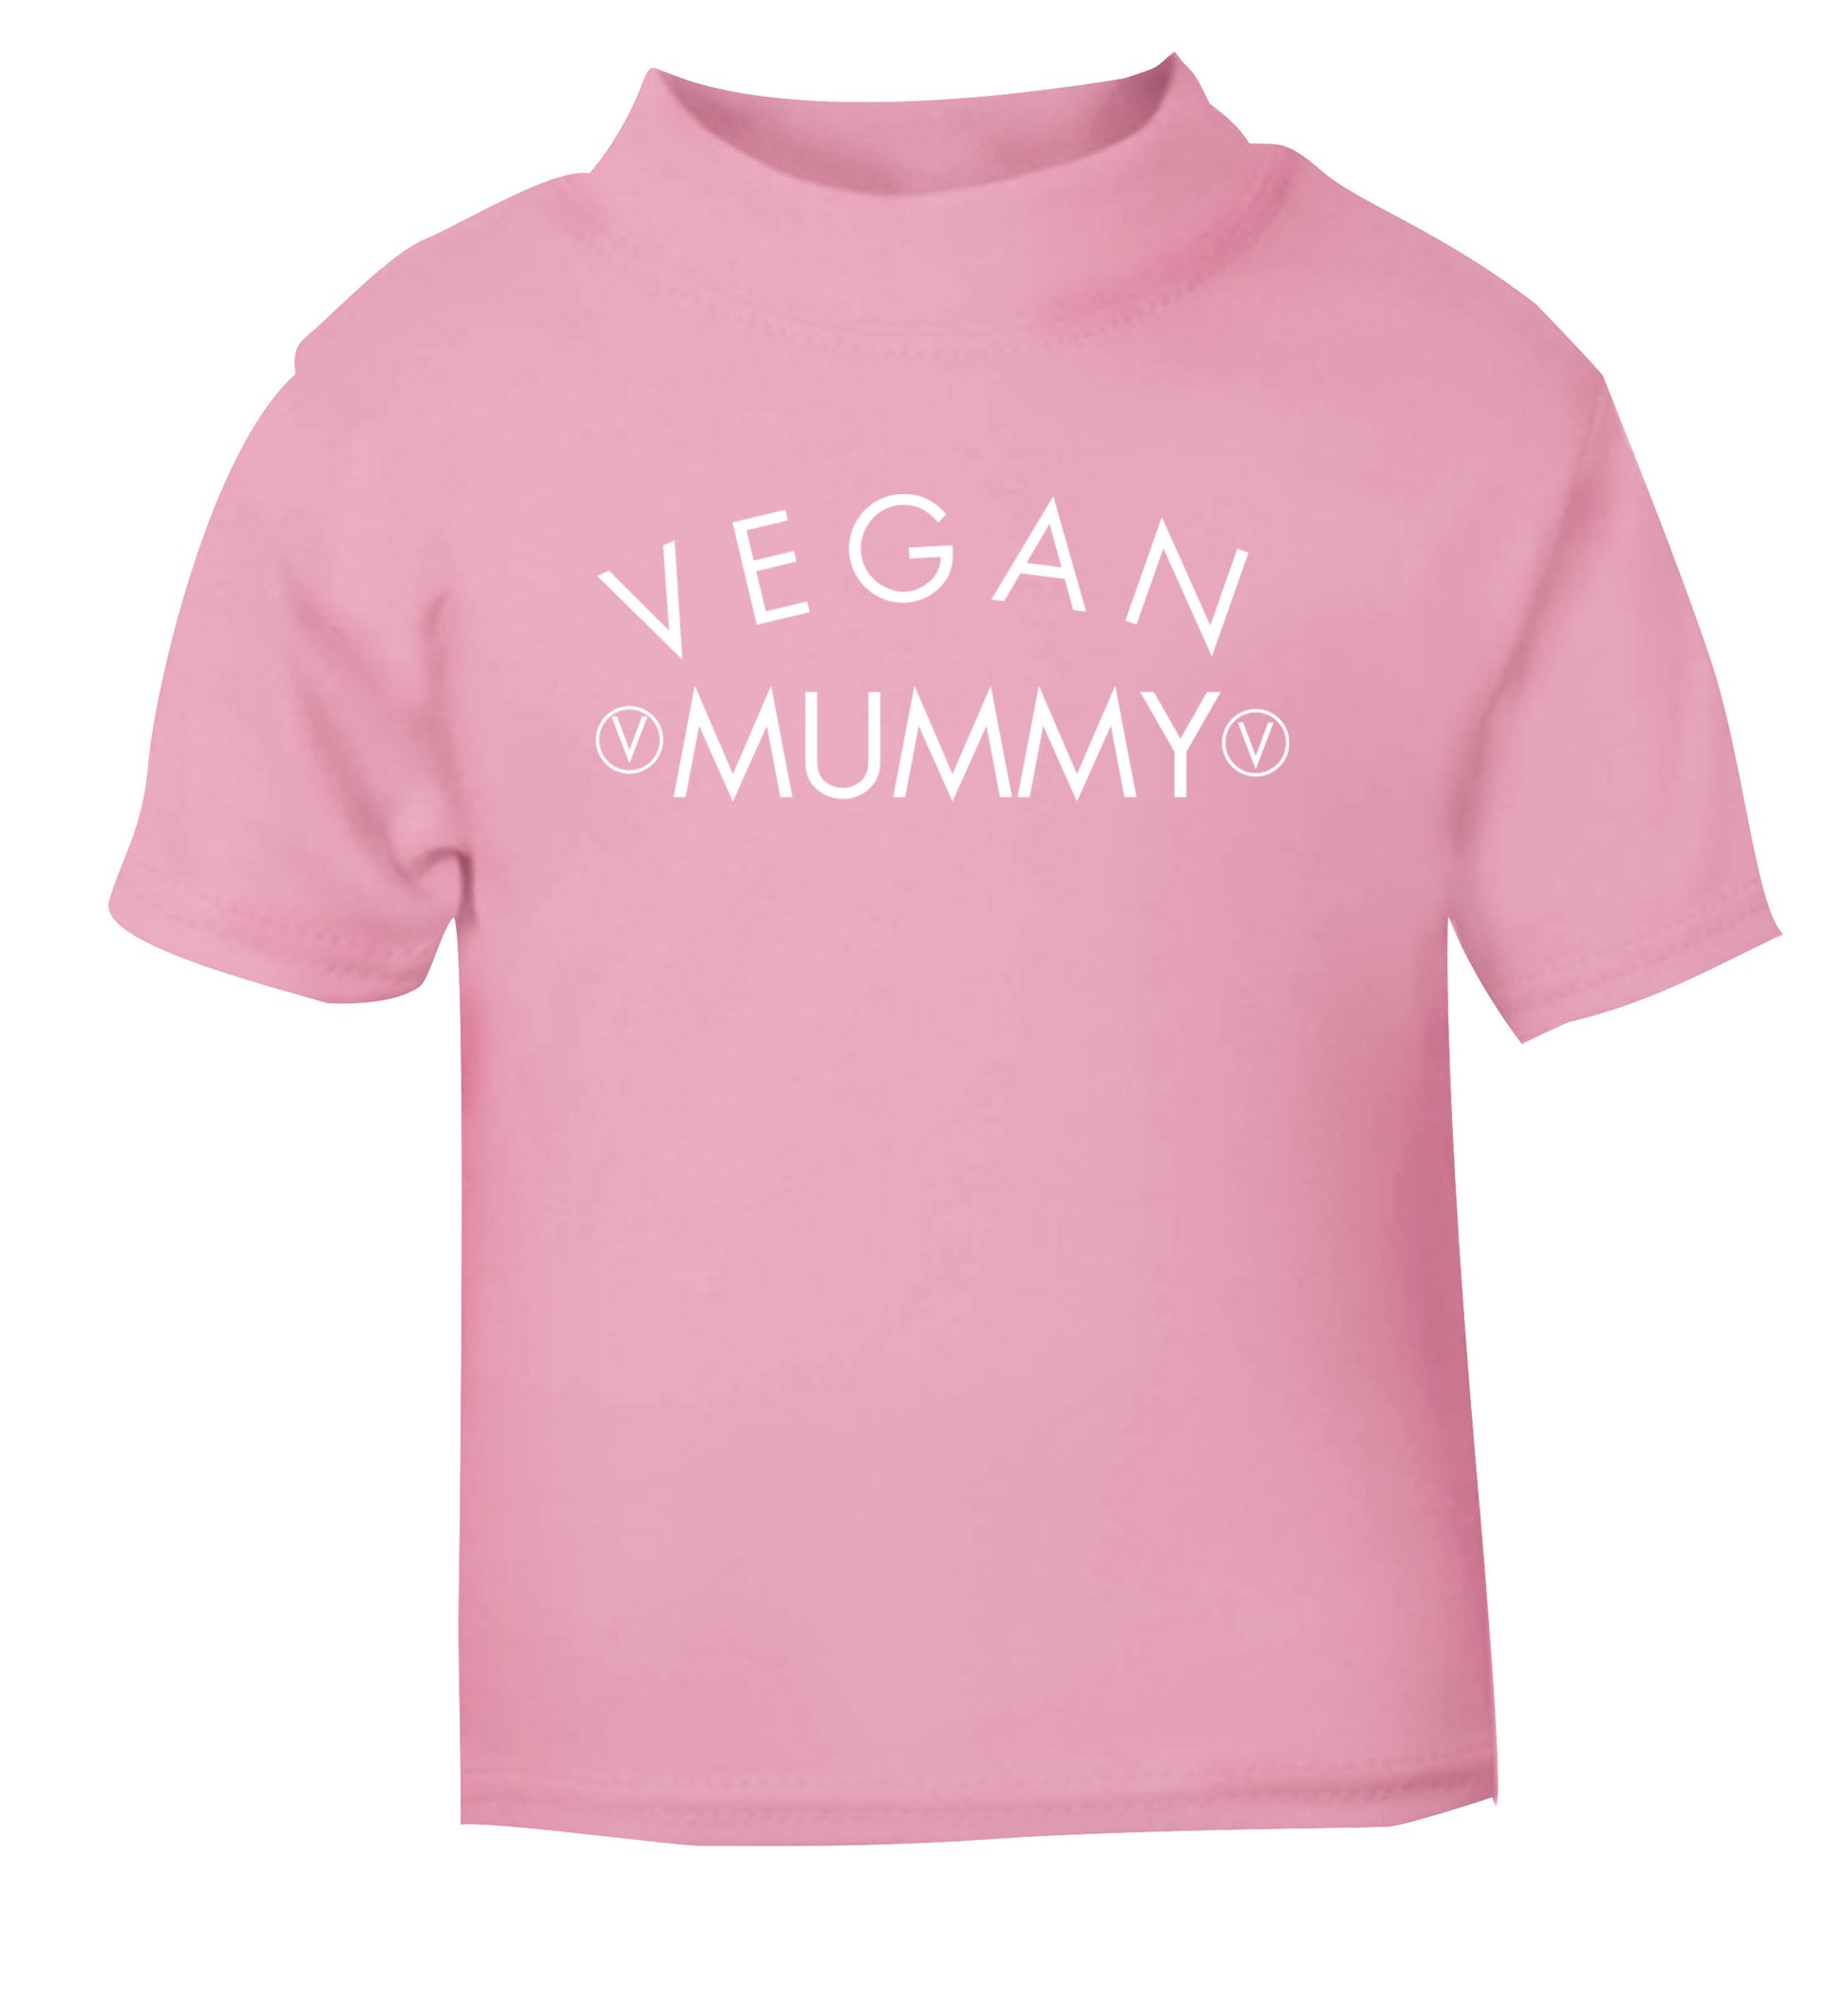 Vegan mummy light pink Baby Toddler Tshirt 2 Years